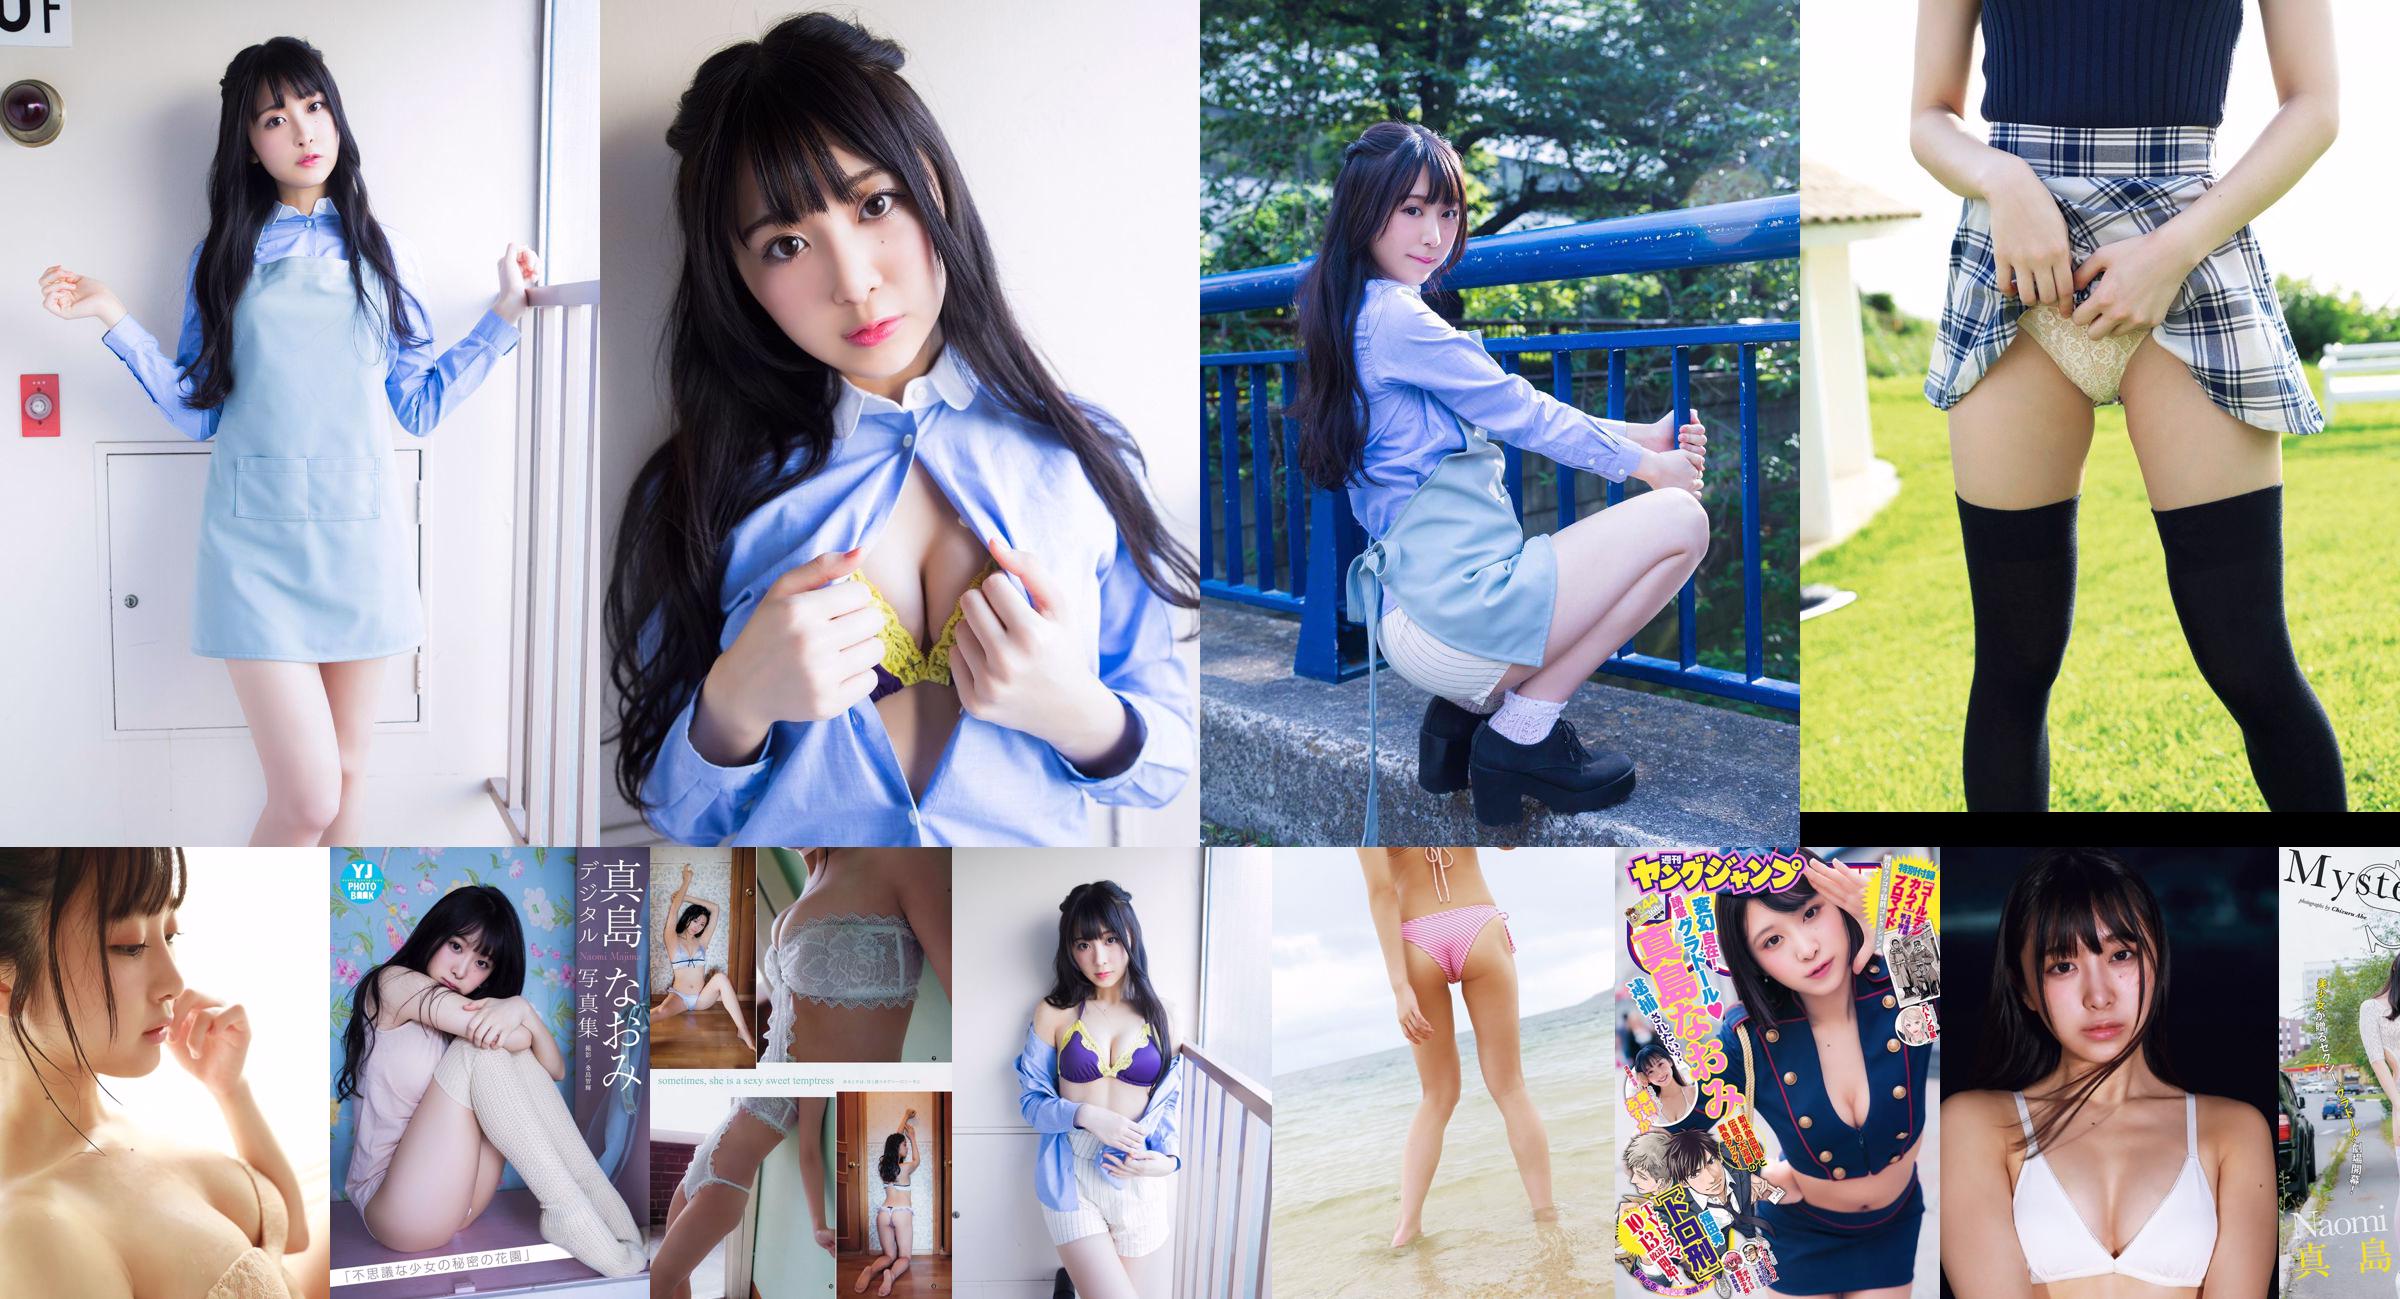 [YS-Web] Vol.851 Nana Mashima "Mooie meid SEXY!! 9-koppige, body-doll-achtige meid!!" No.798a99 Pagina 1